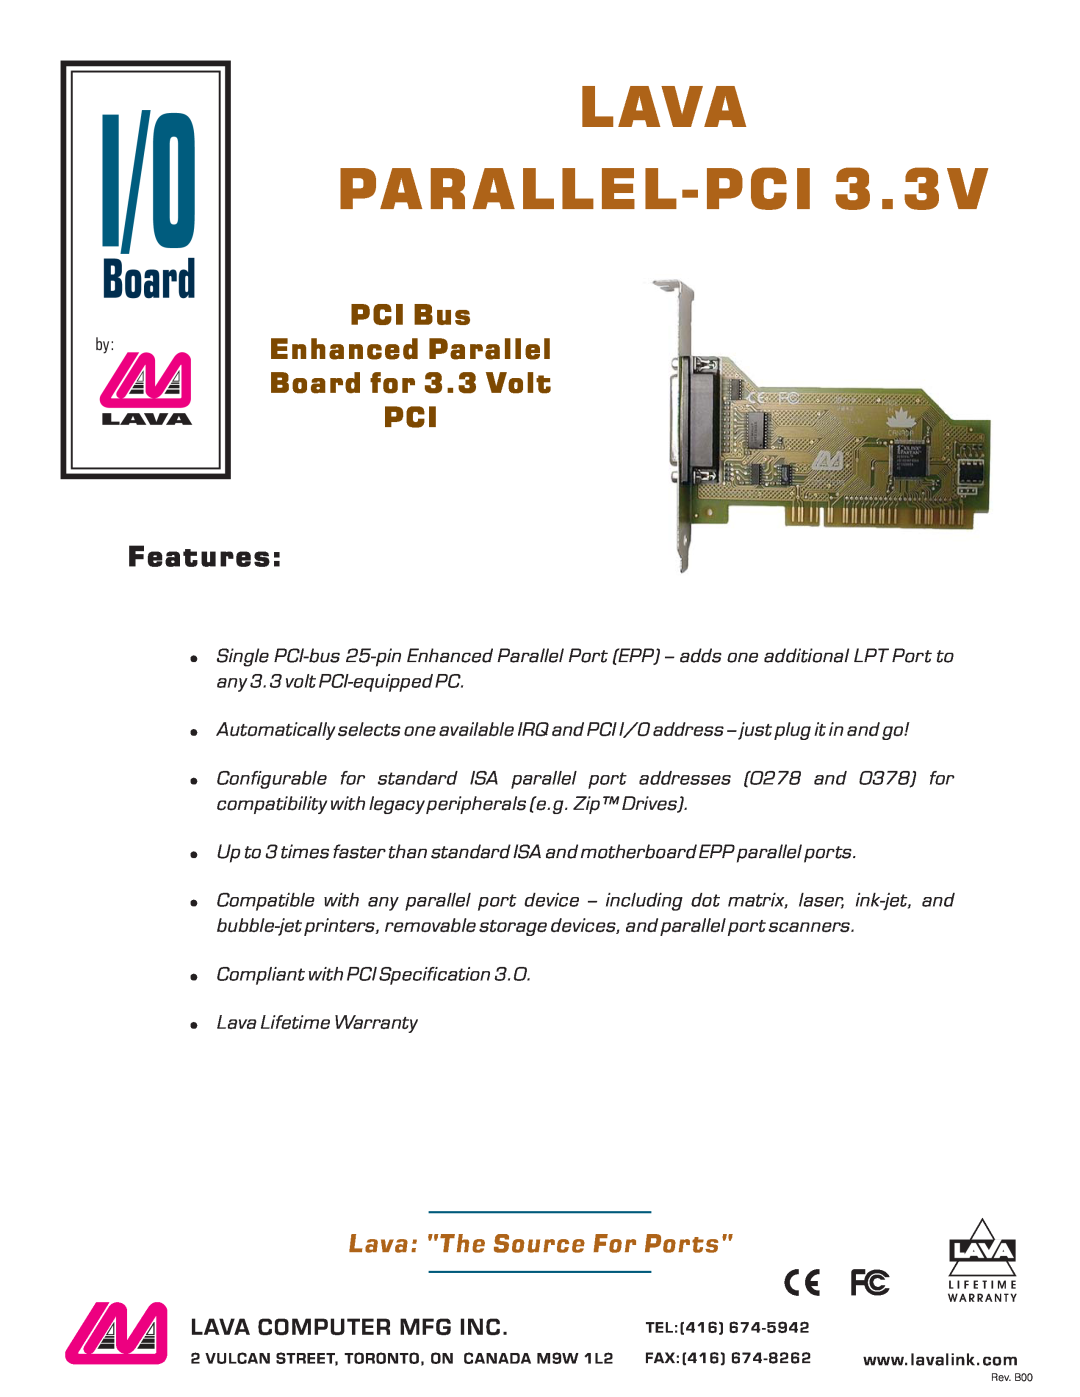 Lava Computer warranty Lava Parallel-Pci, PCI Bus Enhanced Parallel Board for 3.3 Volt PCI, Features 